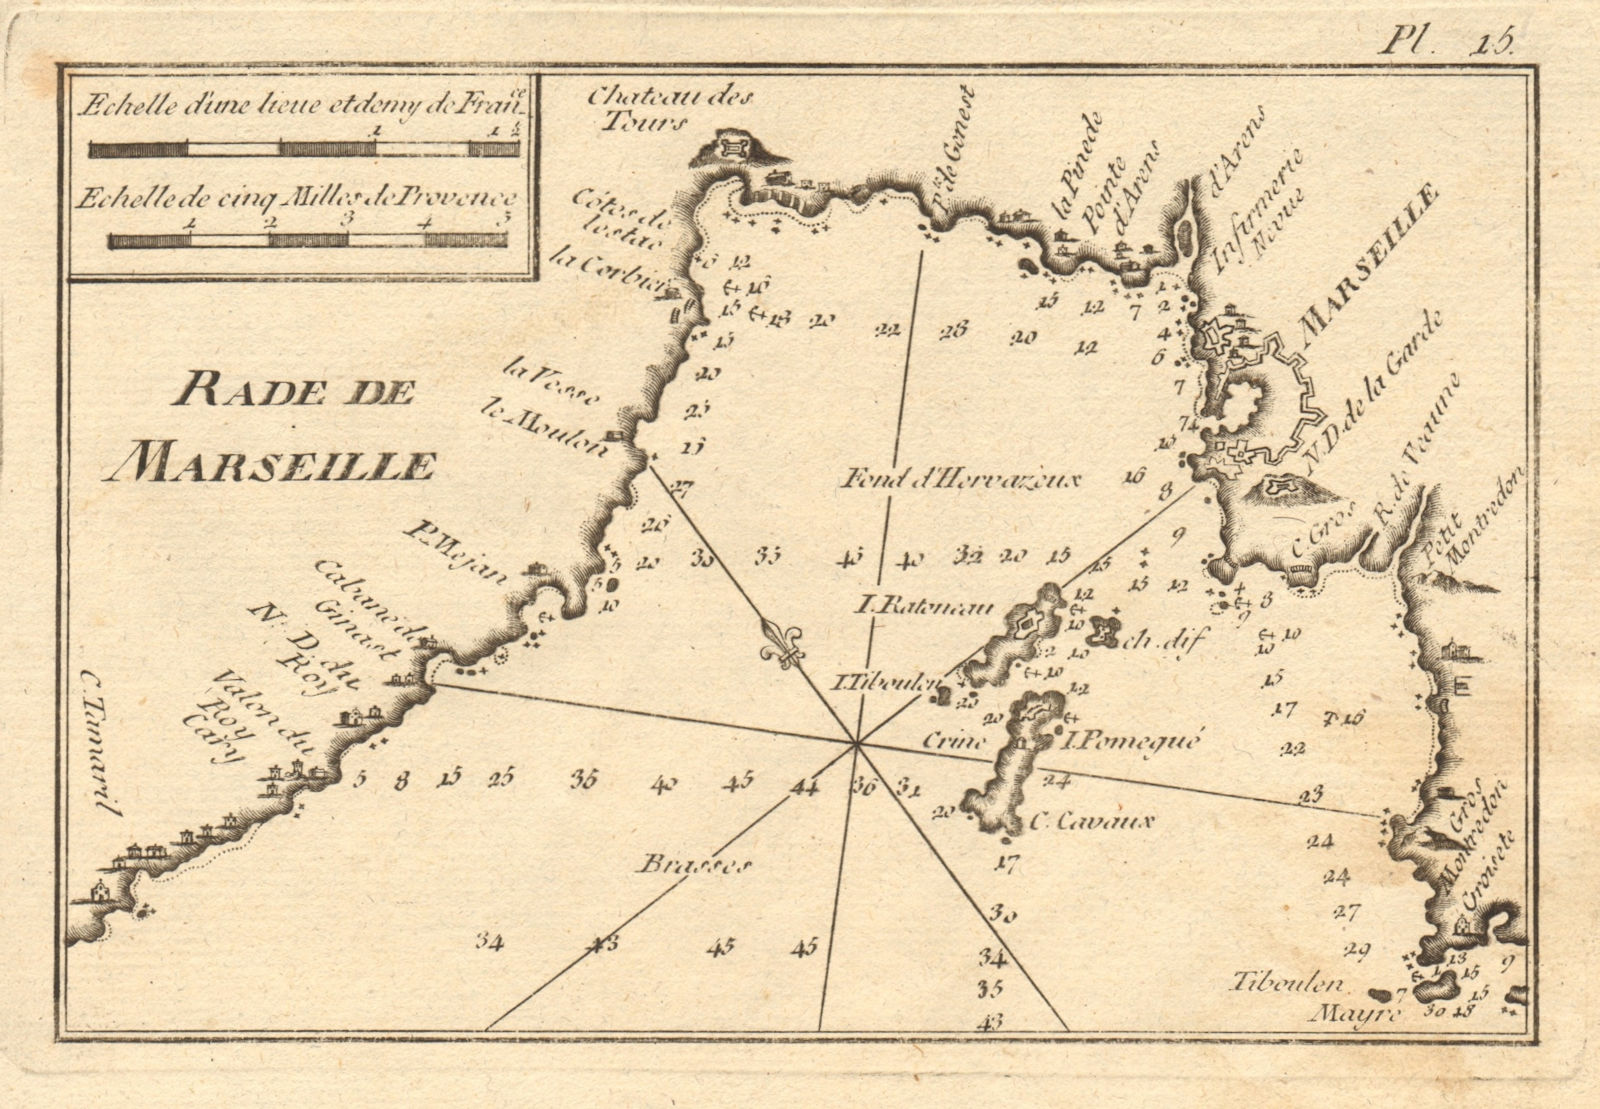 Rade de Marseilles. Frioul archipelago. Bouches-du-Rhône, France. ROUX 1804 map